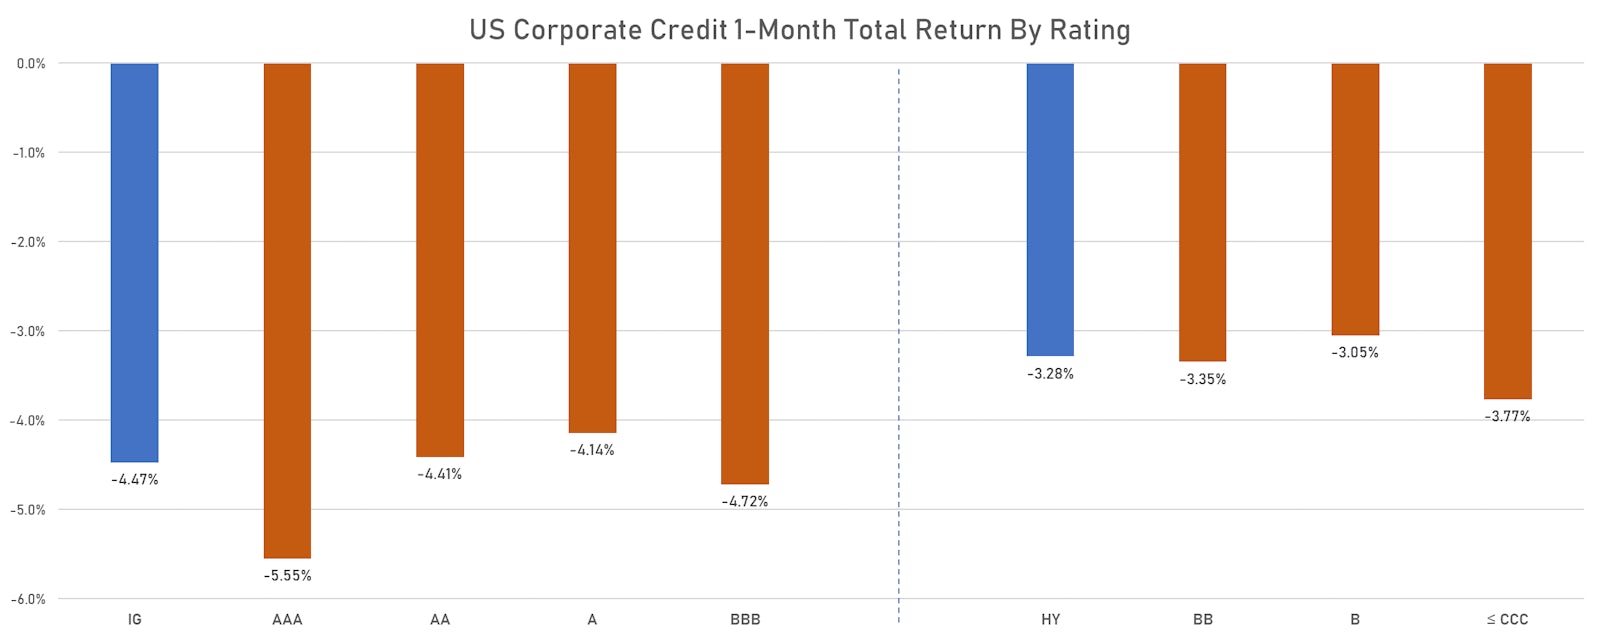 ICE BofAML US Corporate Cash Indices Total Returns | Sources: ϕpost, Refinitiv data